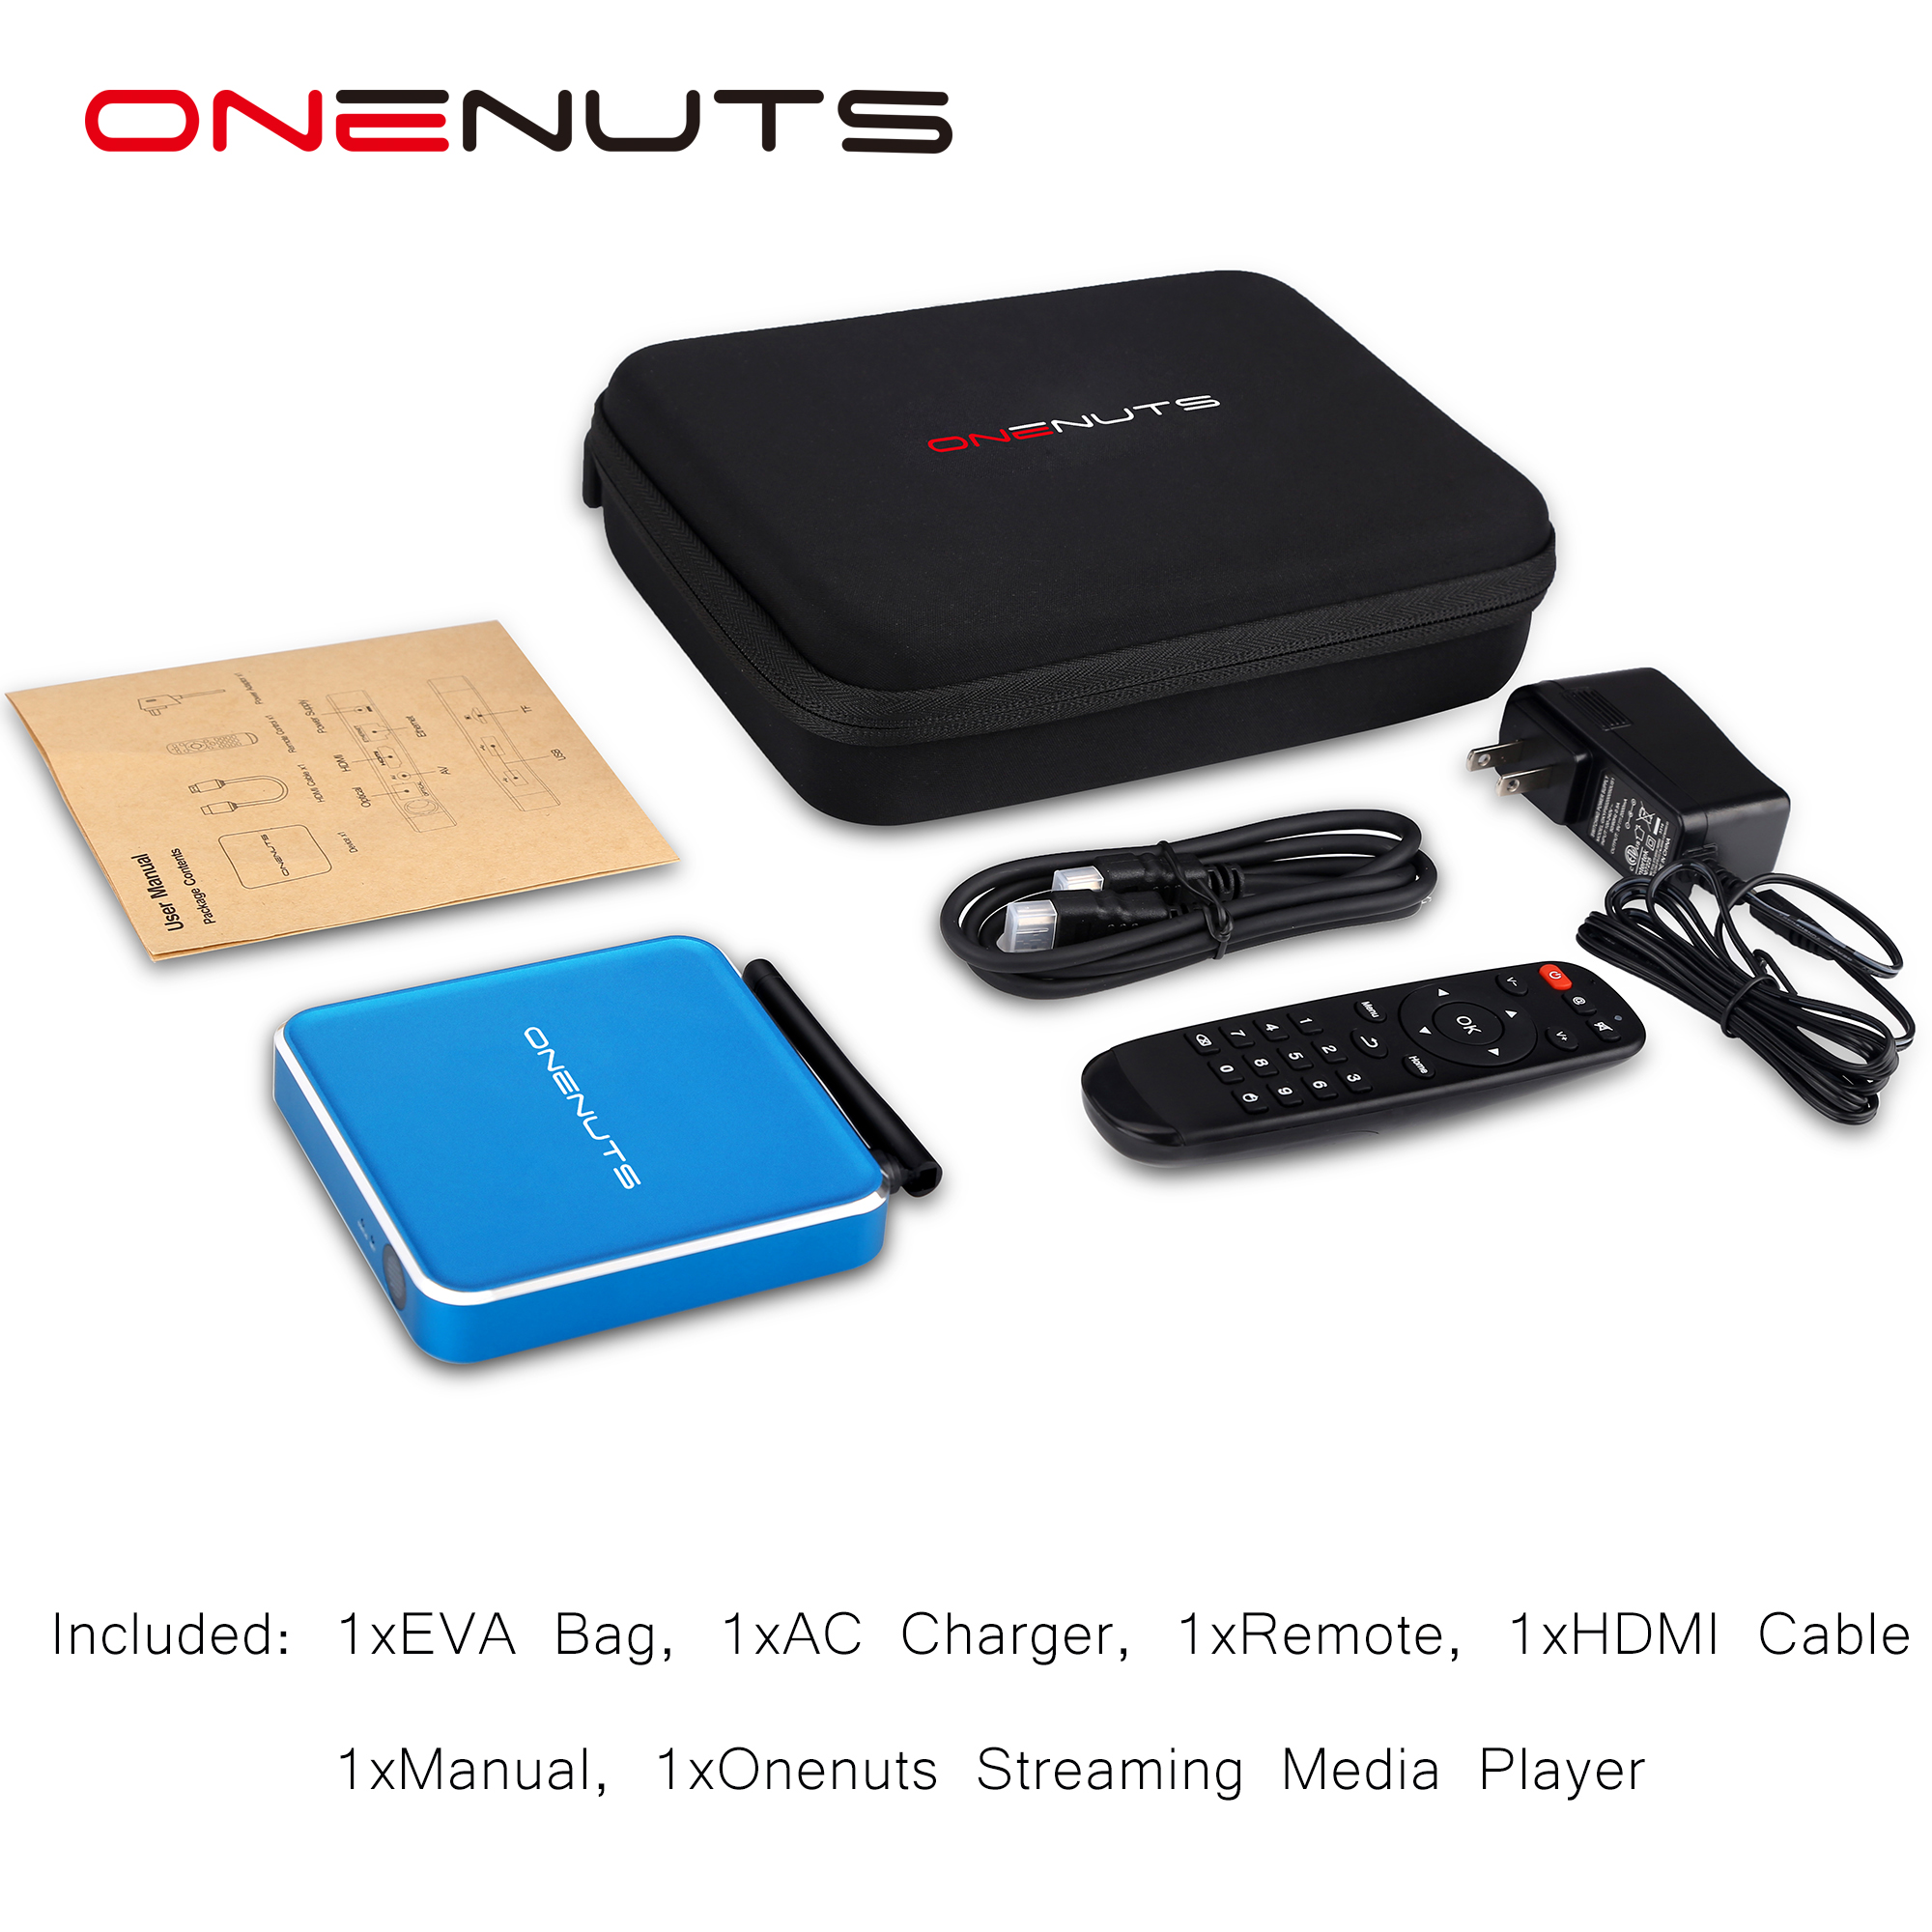 2-em-1 Octa Core Streaming Media Player e jogo Android TV Box com Android 6.0 Marshmallow 2G DDR3 16G eMMC Dual-Band AC Wi-Fi apoio KODI YouTube Netflix Facebook e muitos mais - Onenuts Nut 1 Blue